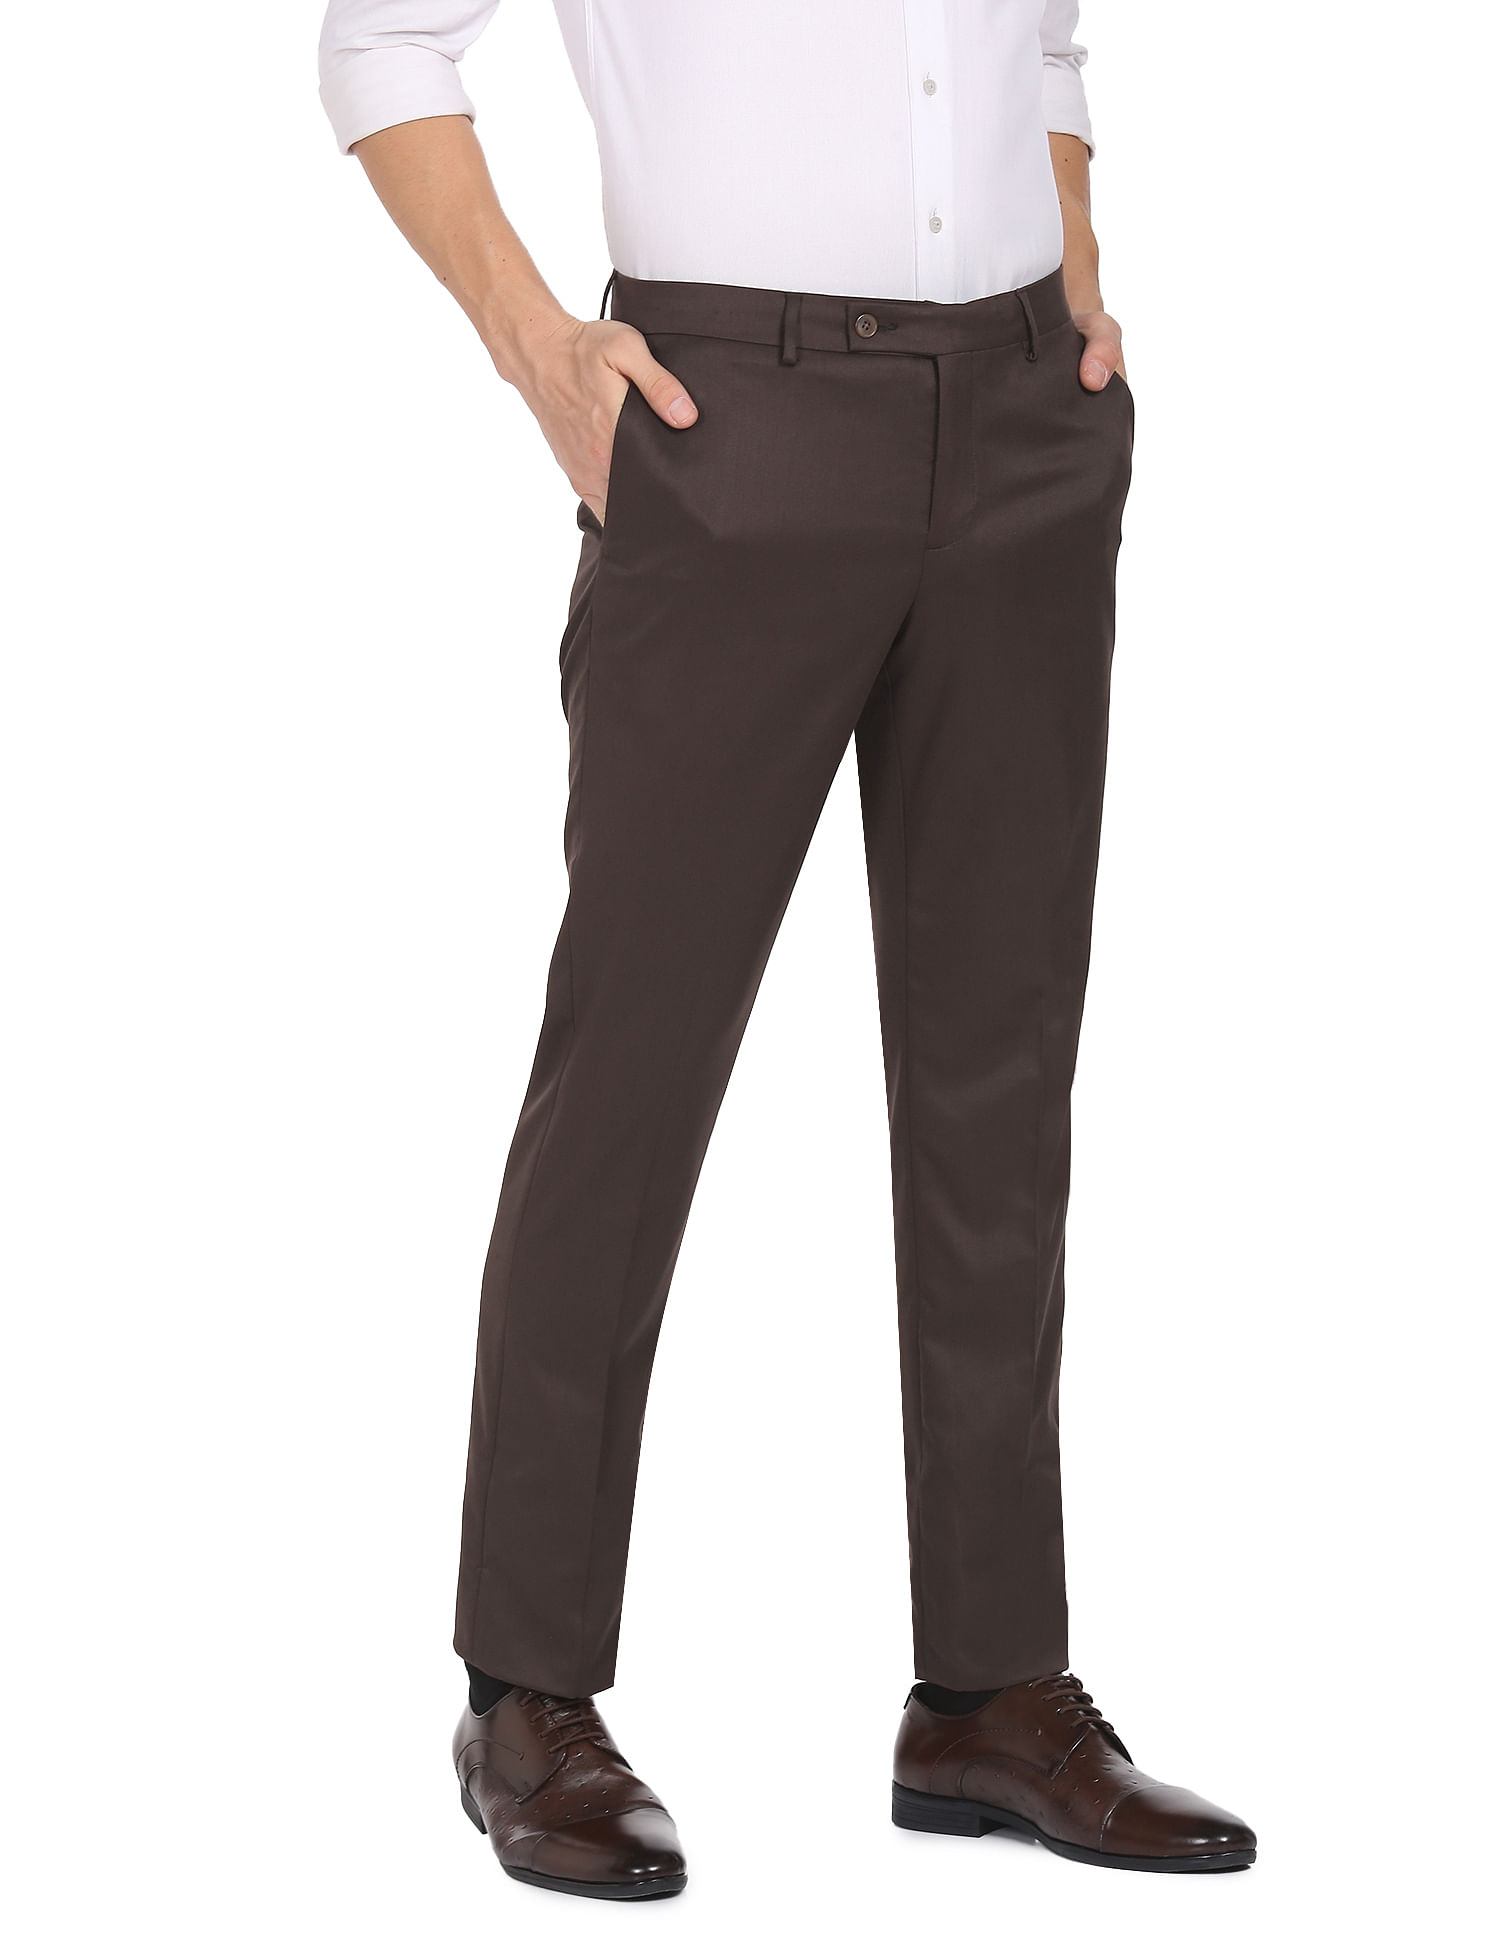 Buy AD & AV Men's Regular Fit Formal Trouser (Brown) at Amazon.in